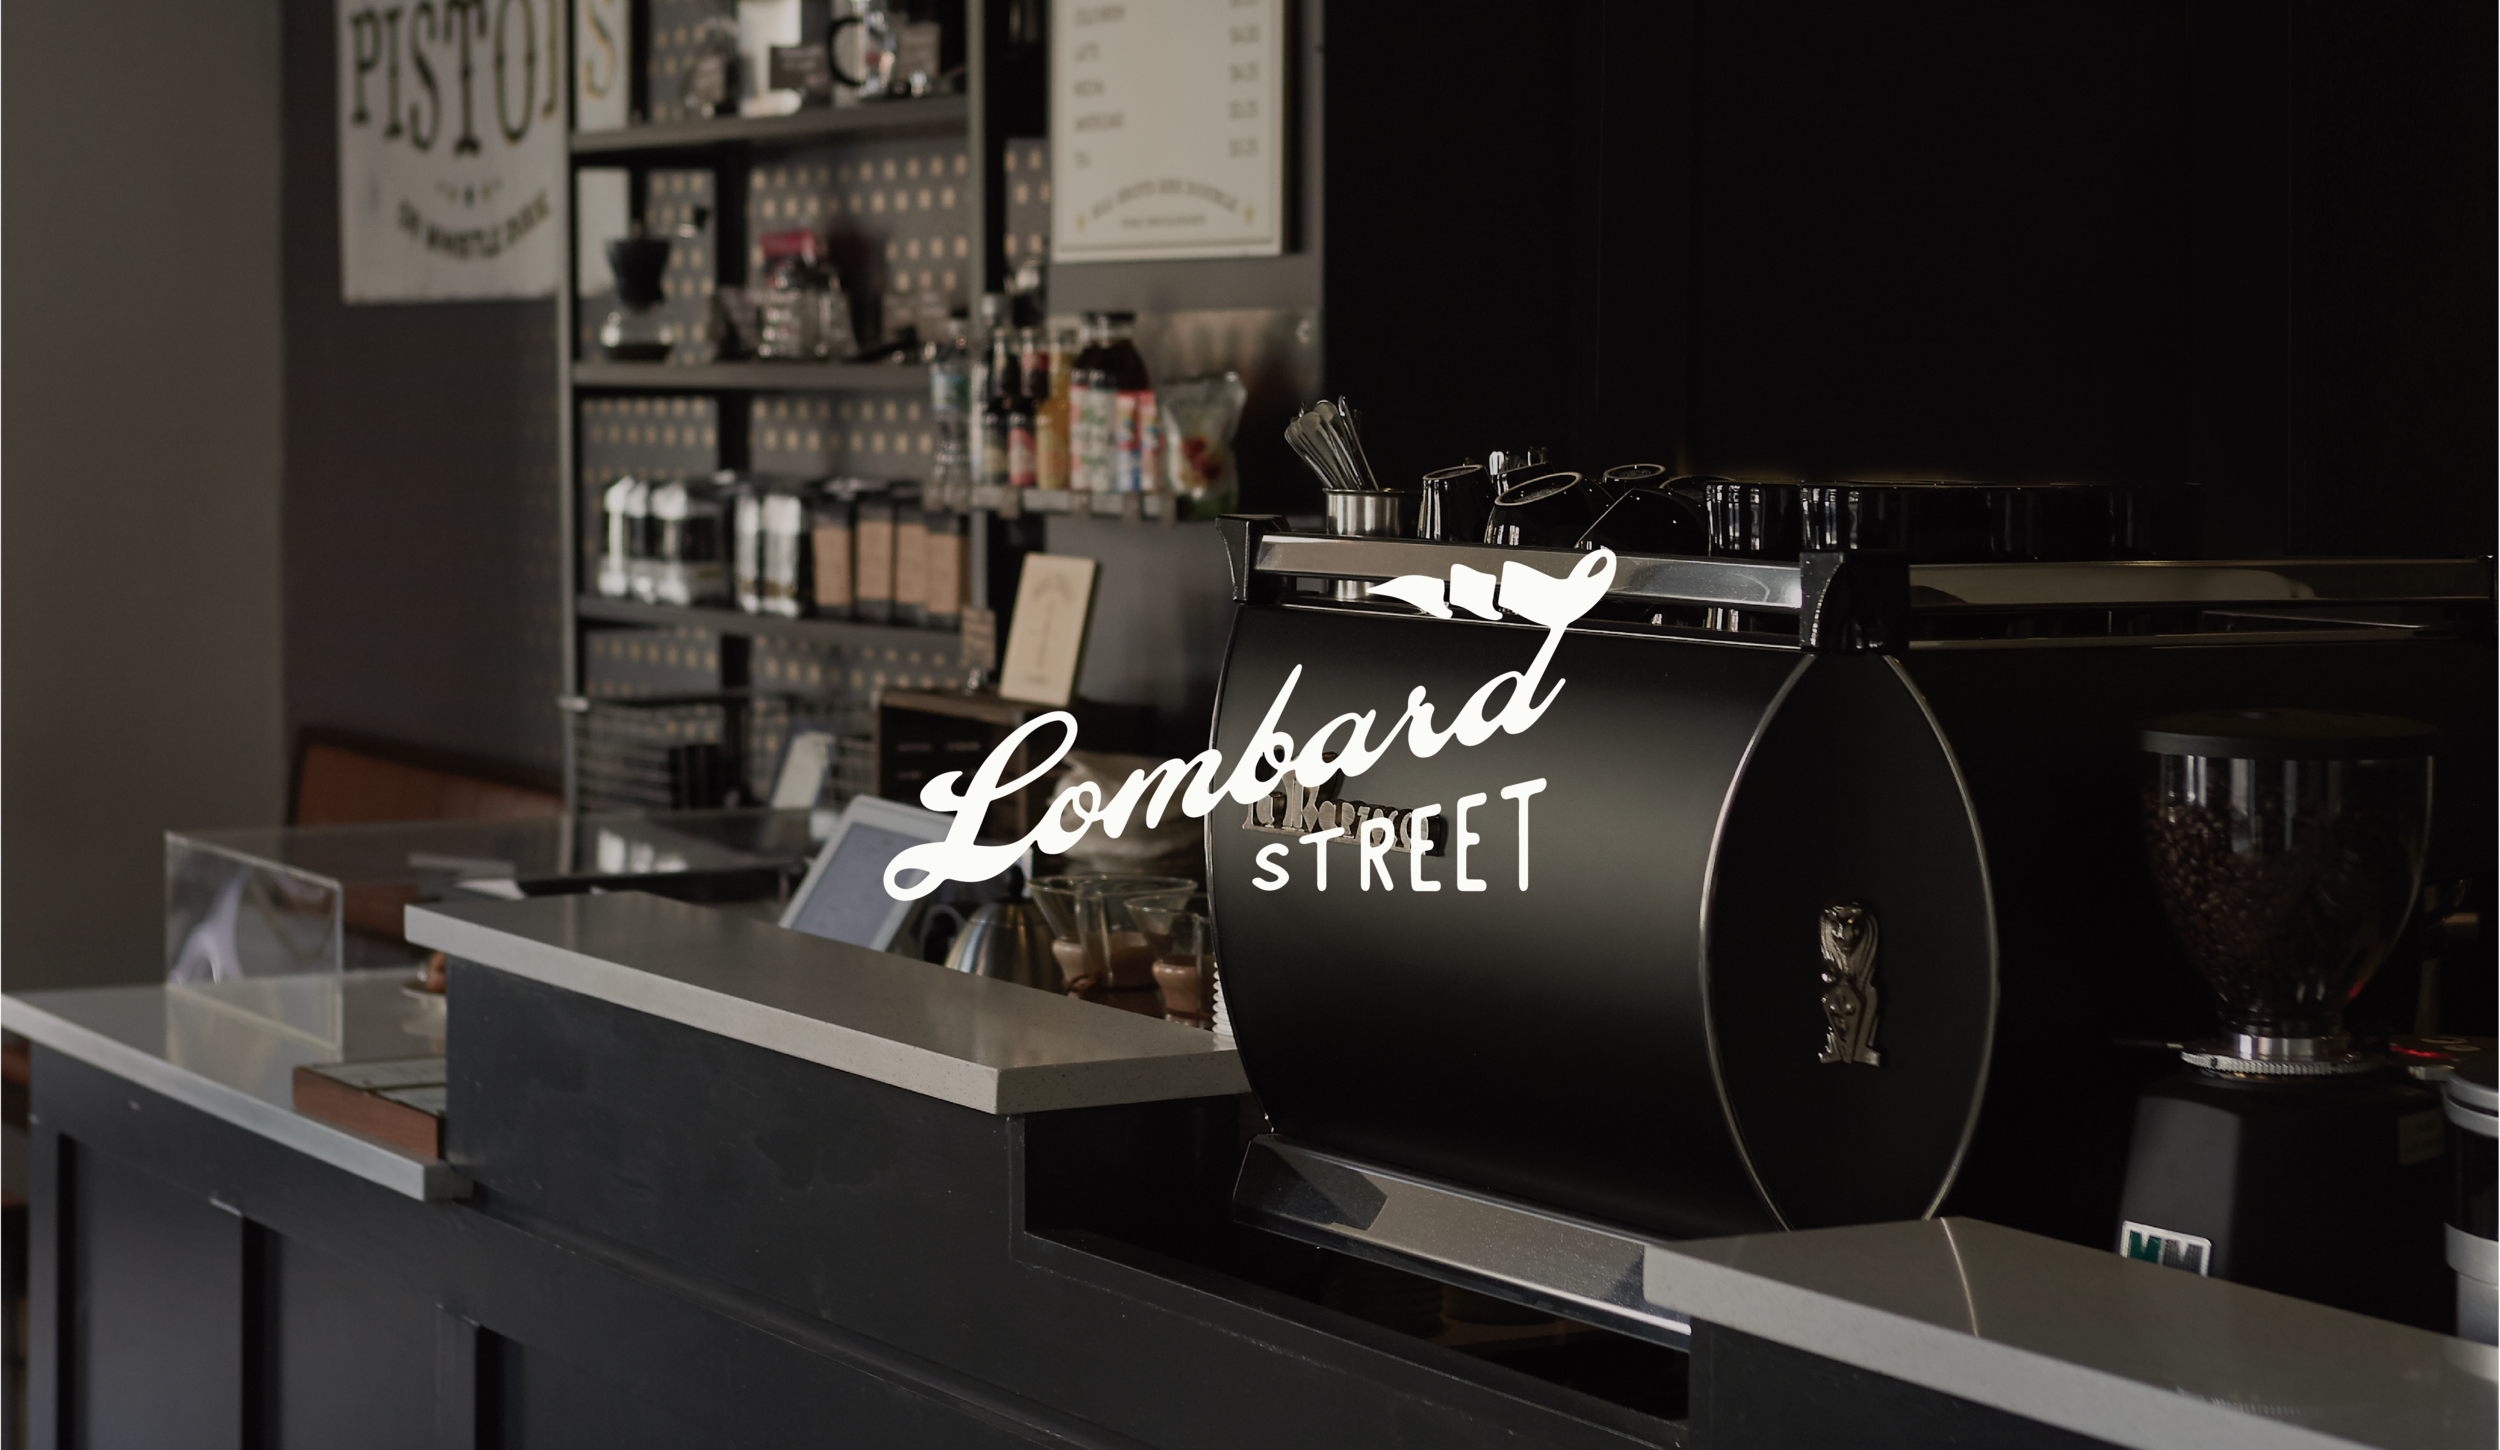 Lombard street coffee bar